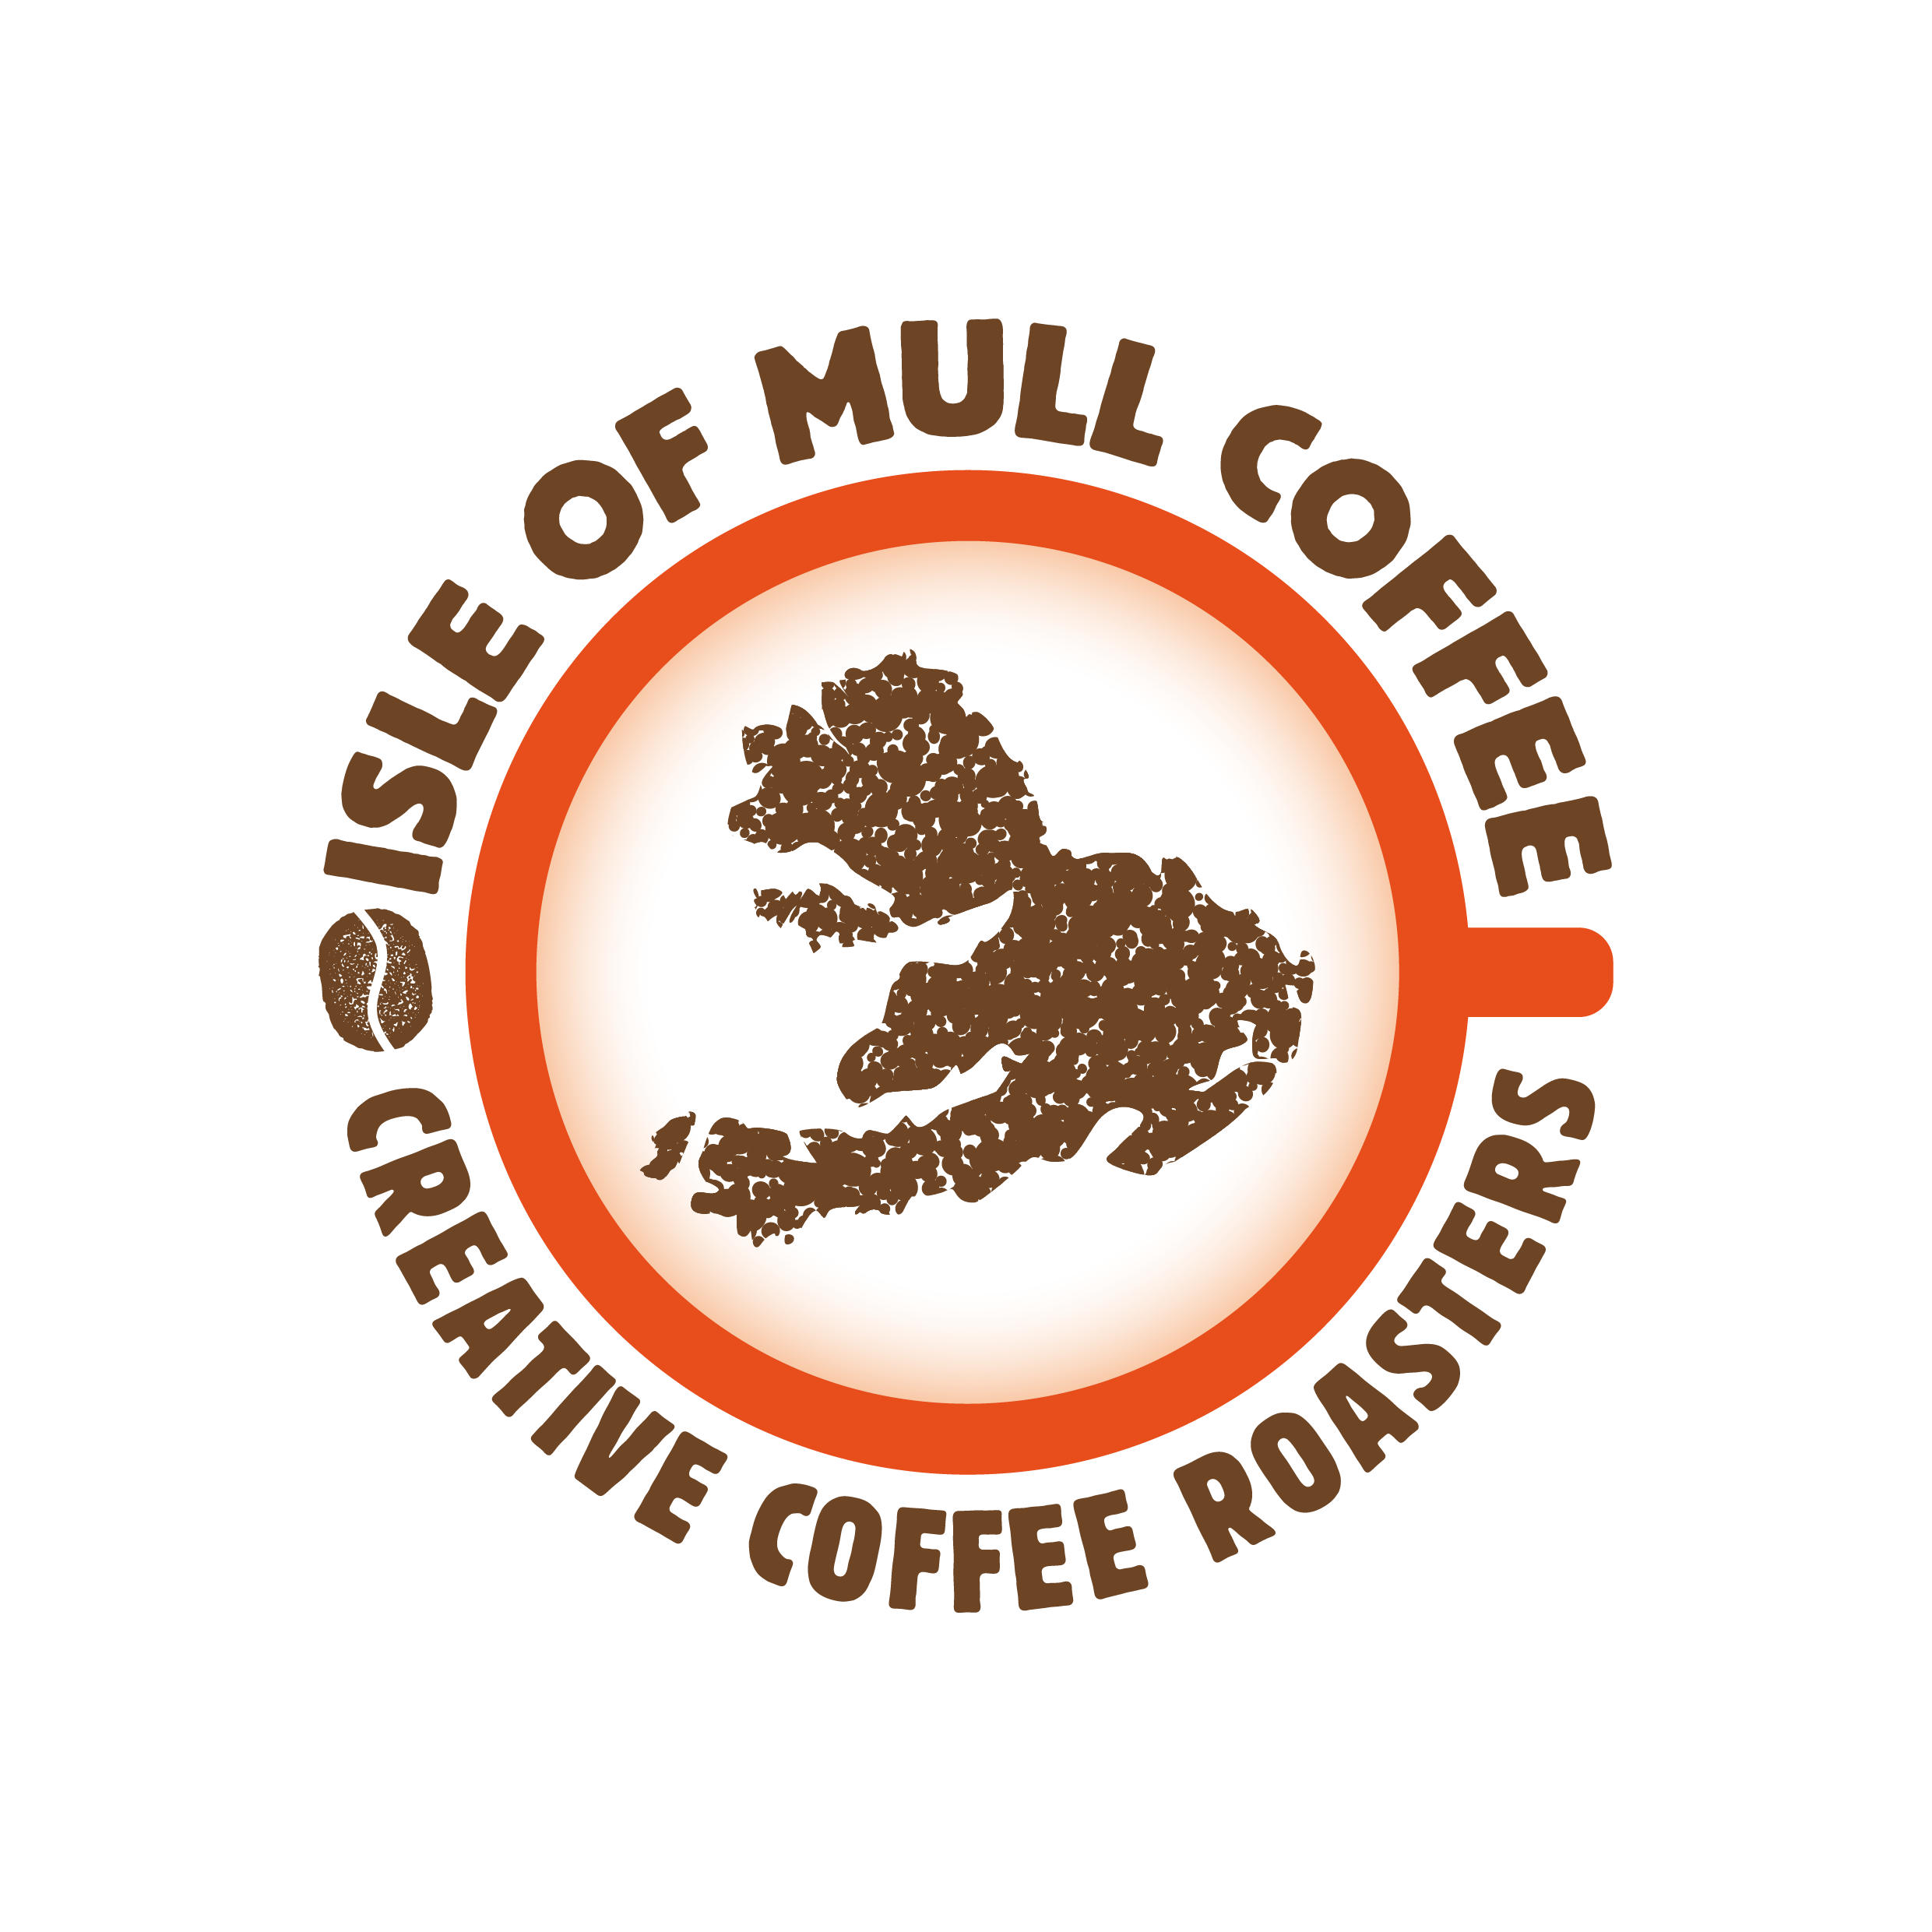 Isle of Mull Coffee